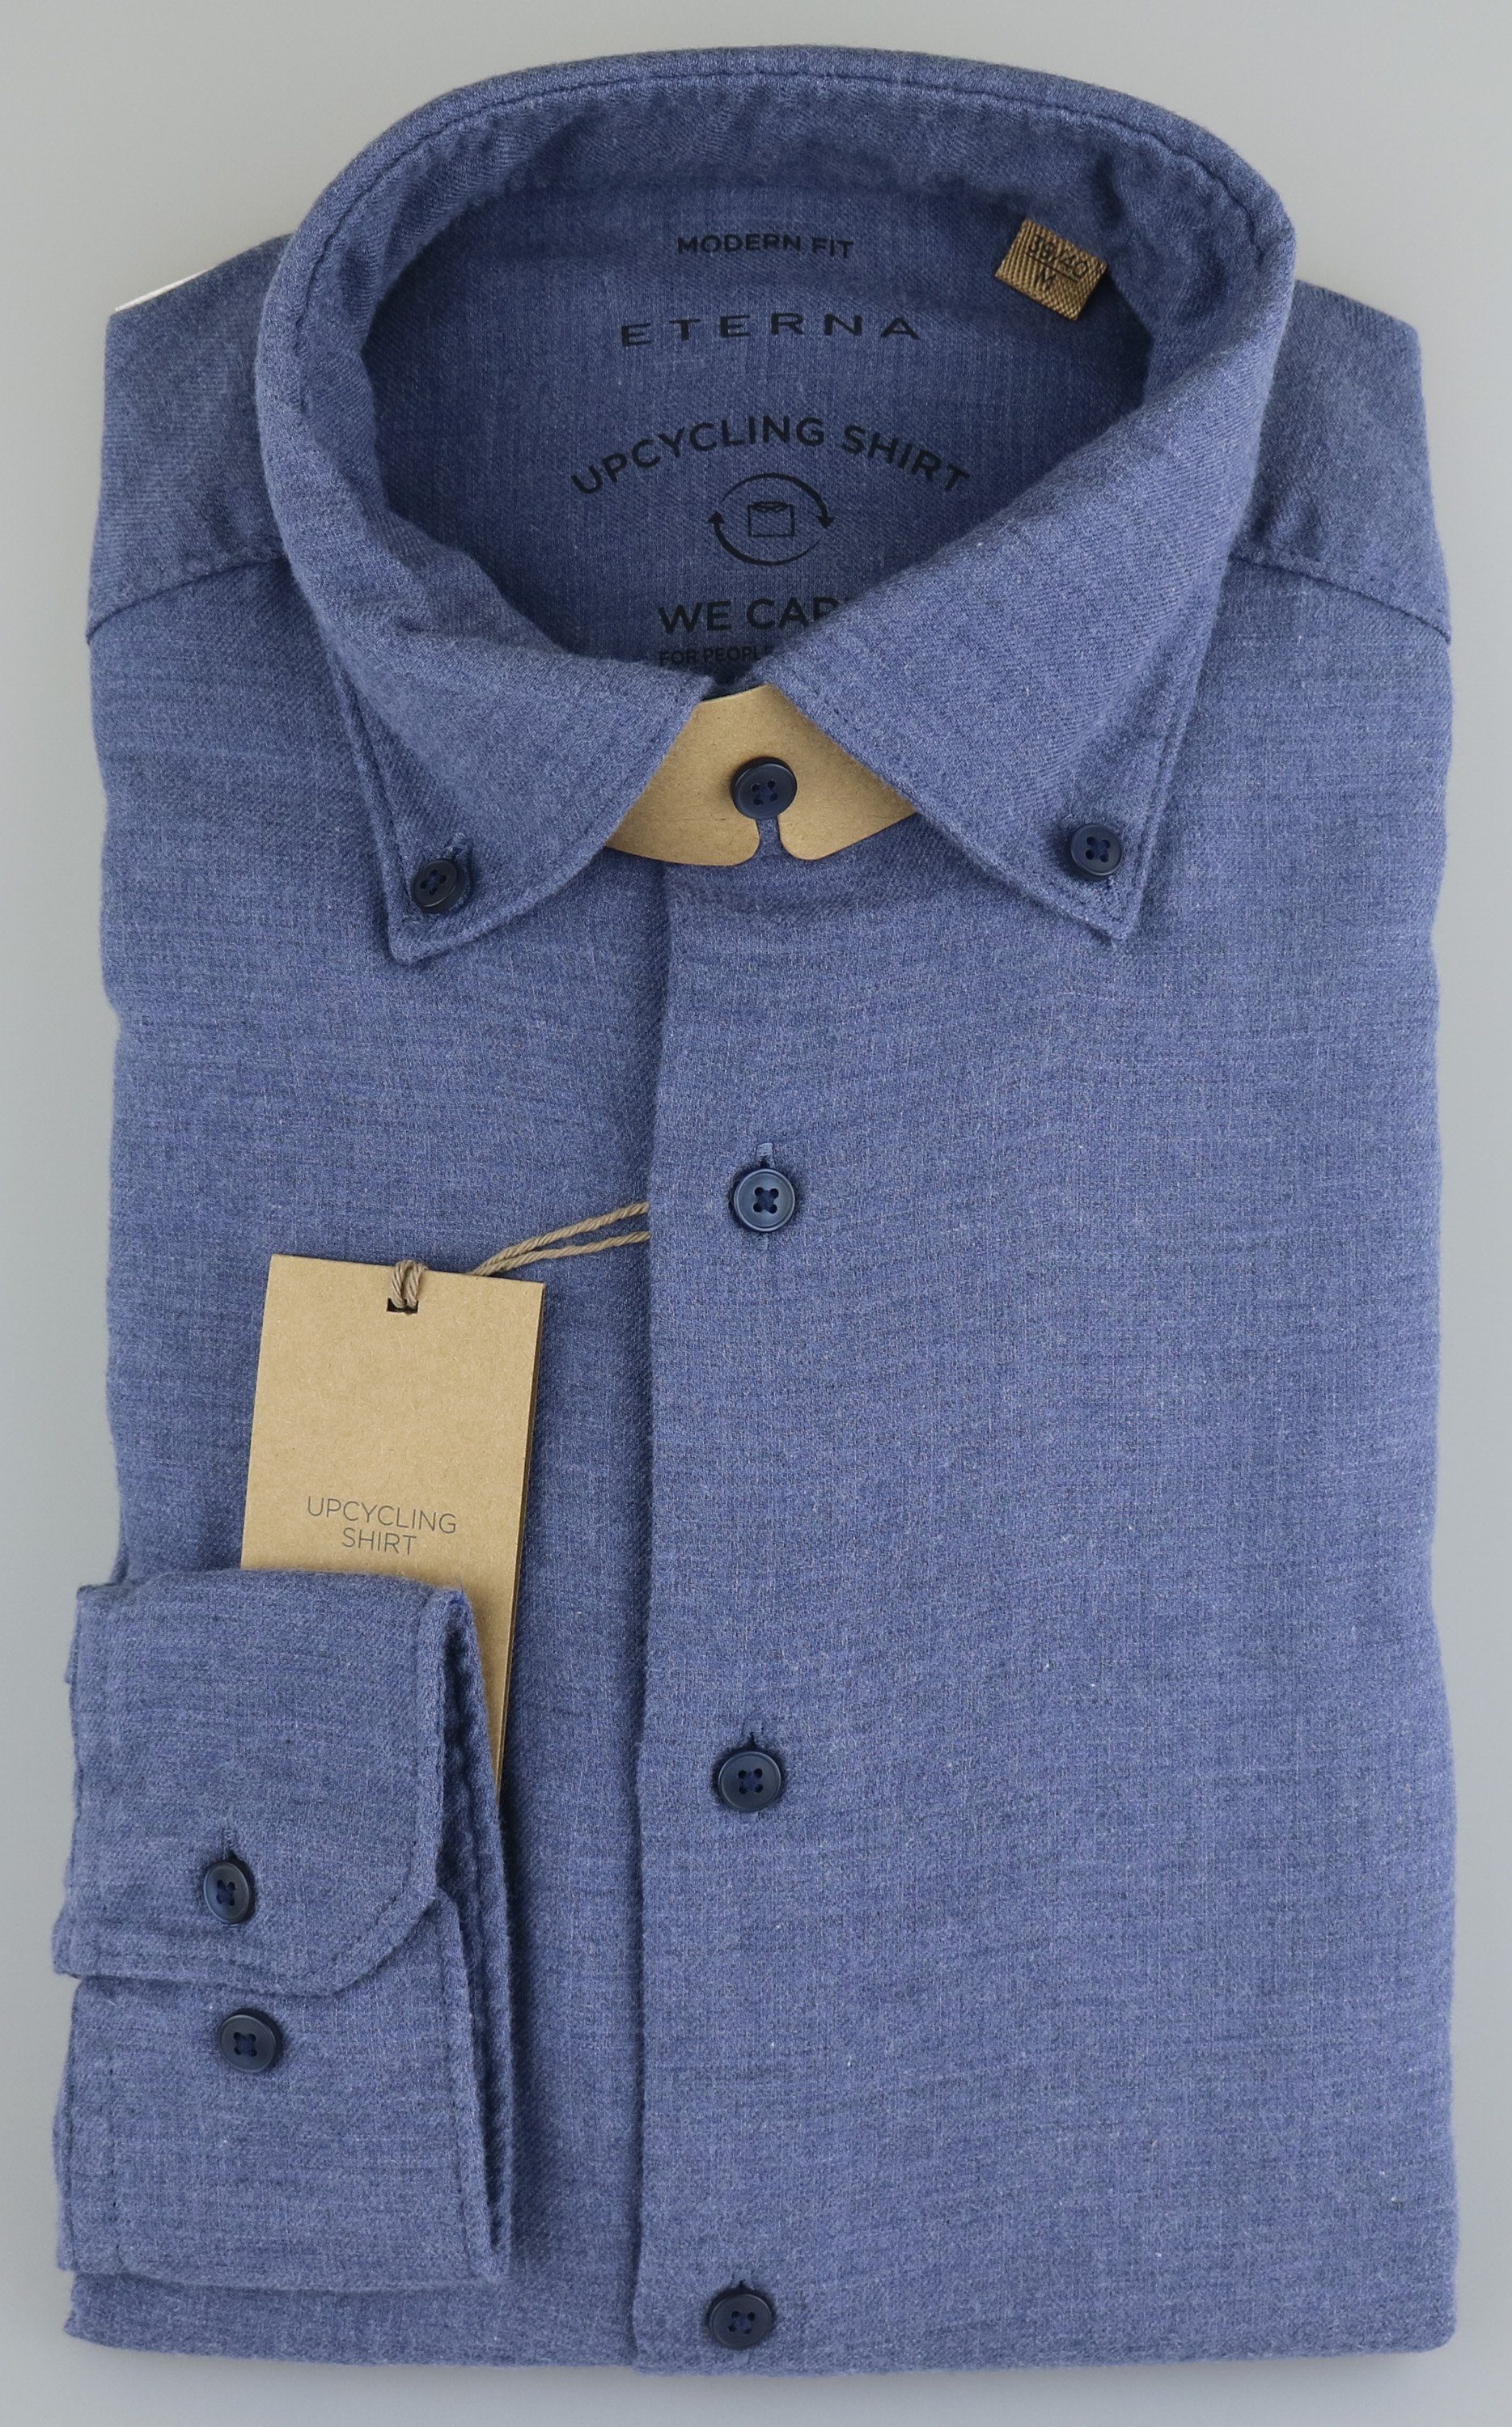 Eterna Klassische Bluse ETERNA MODERN FIT UPCYCLING SHIRT Langarm Hemd jeansblau 2389-17-VS74